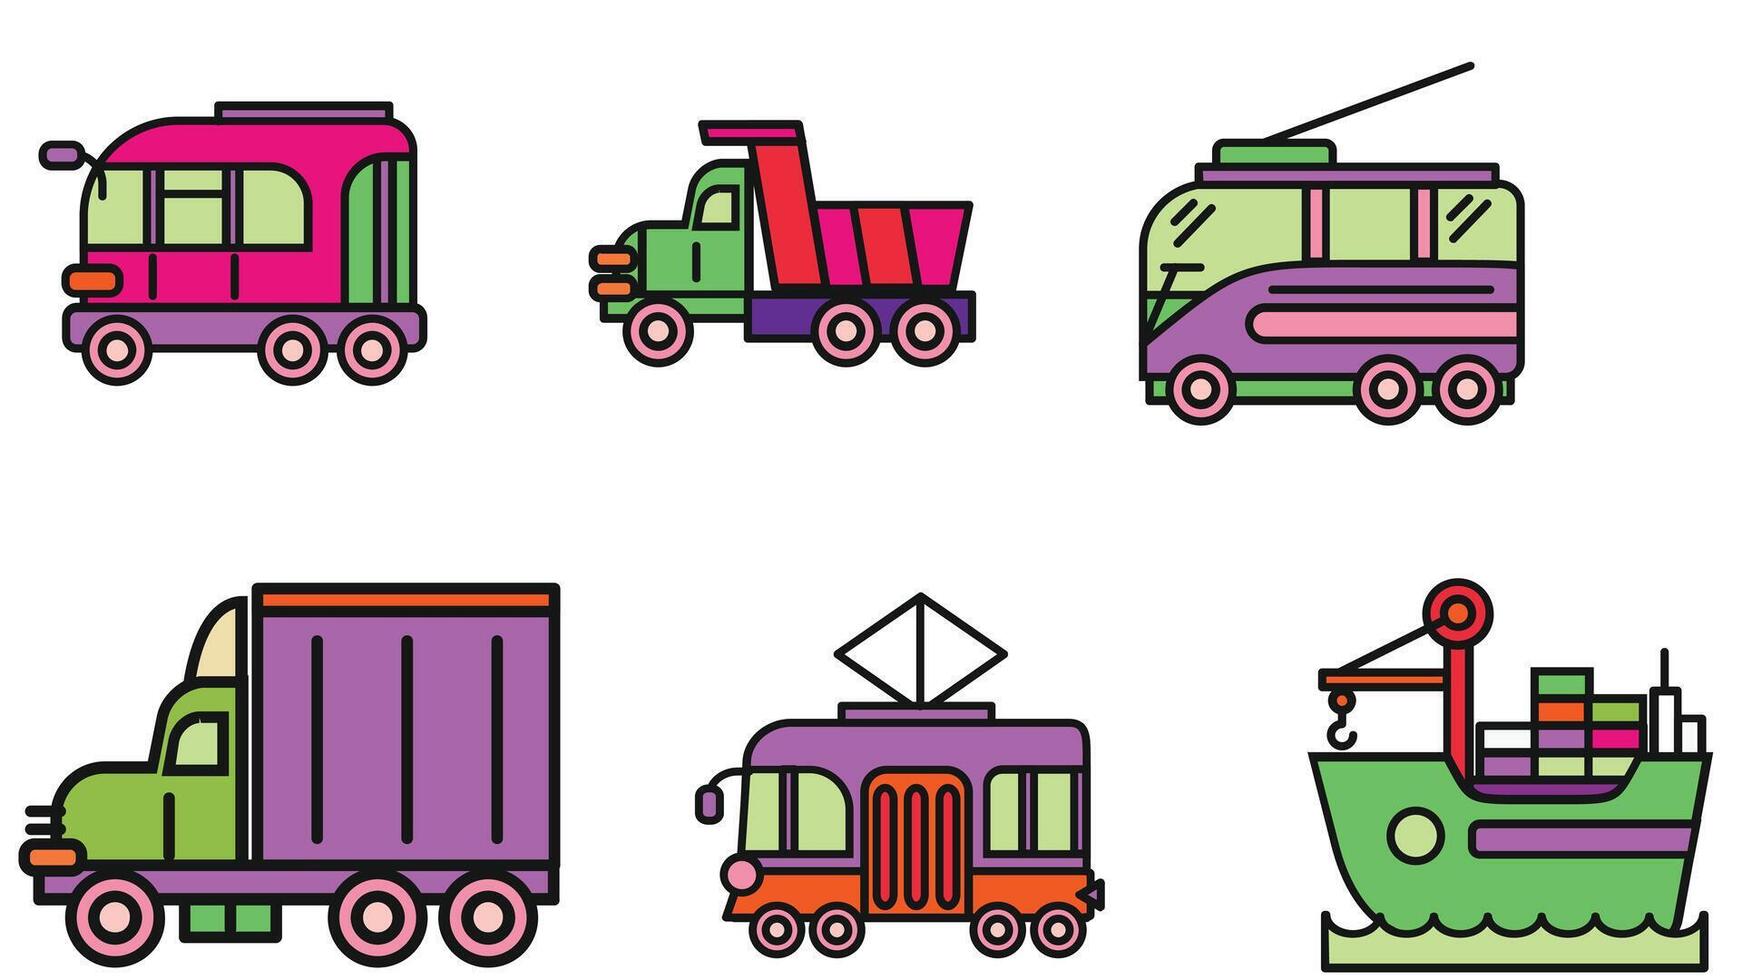 Transportation and types of vehicles vector art illustration